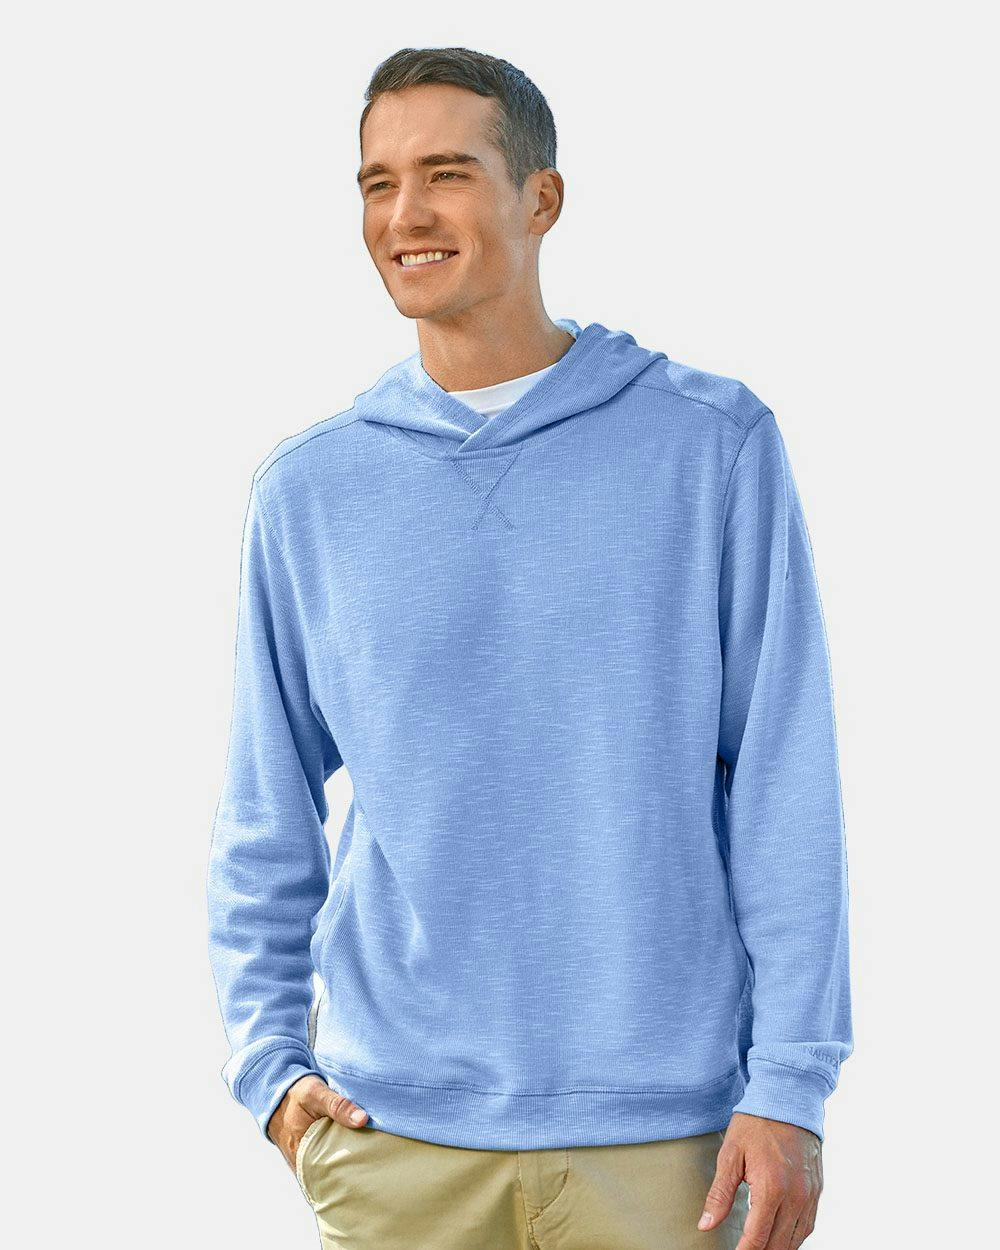 Image for Sun Surfer Supreme Hooded Sweatshirt - N17990